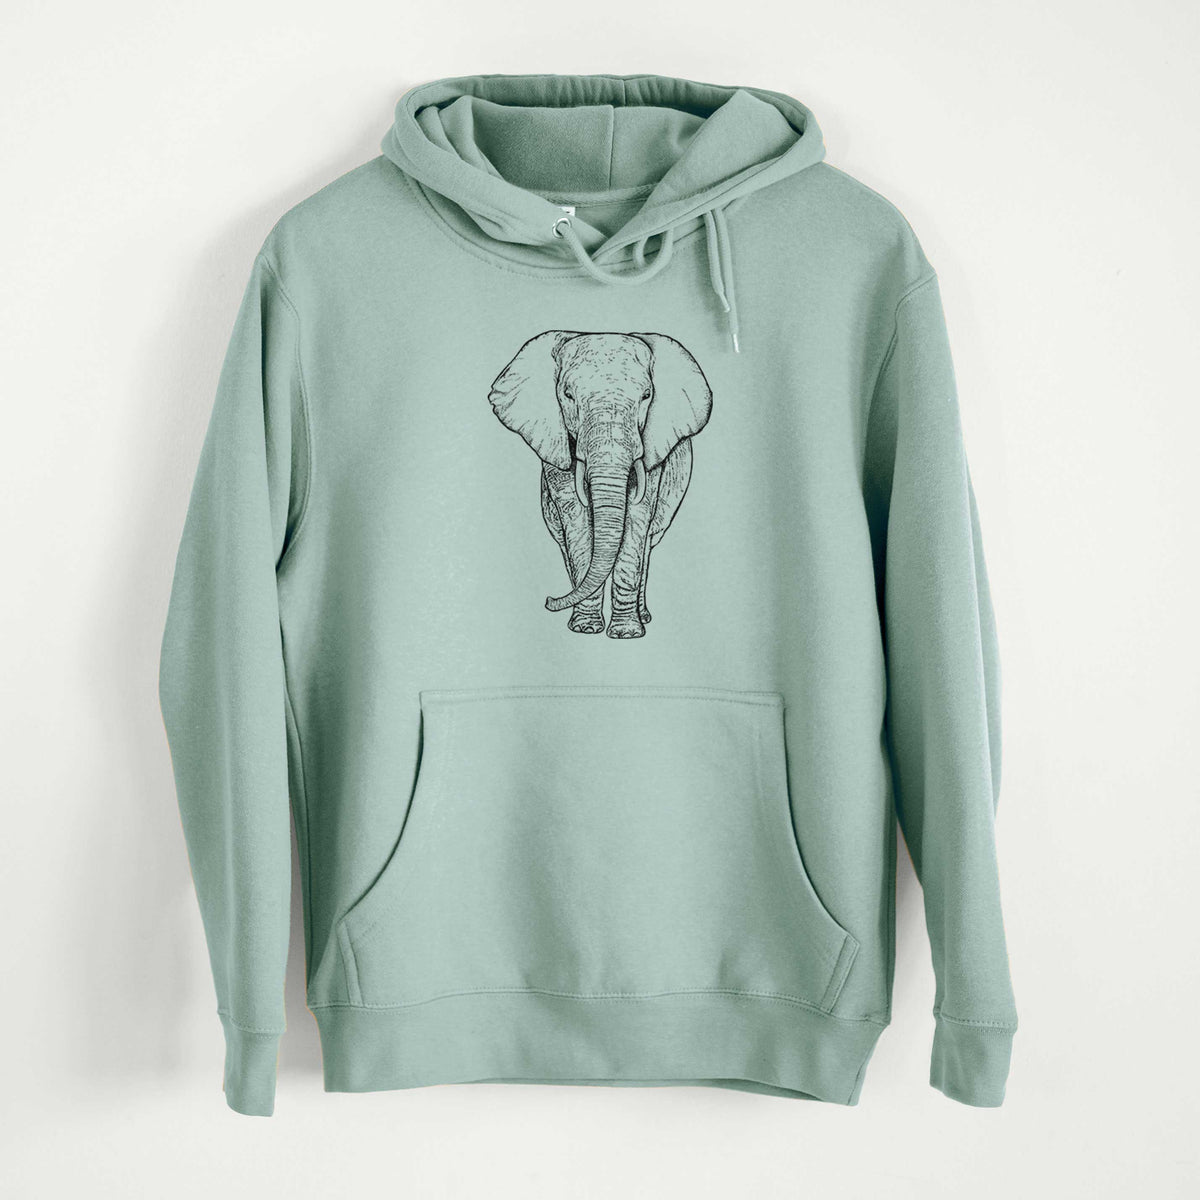 Loxodonta africana - African Elephant  - Mid-Weight Unisex Premium Blend Hoodie